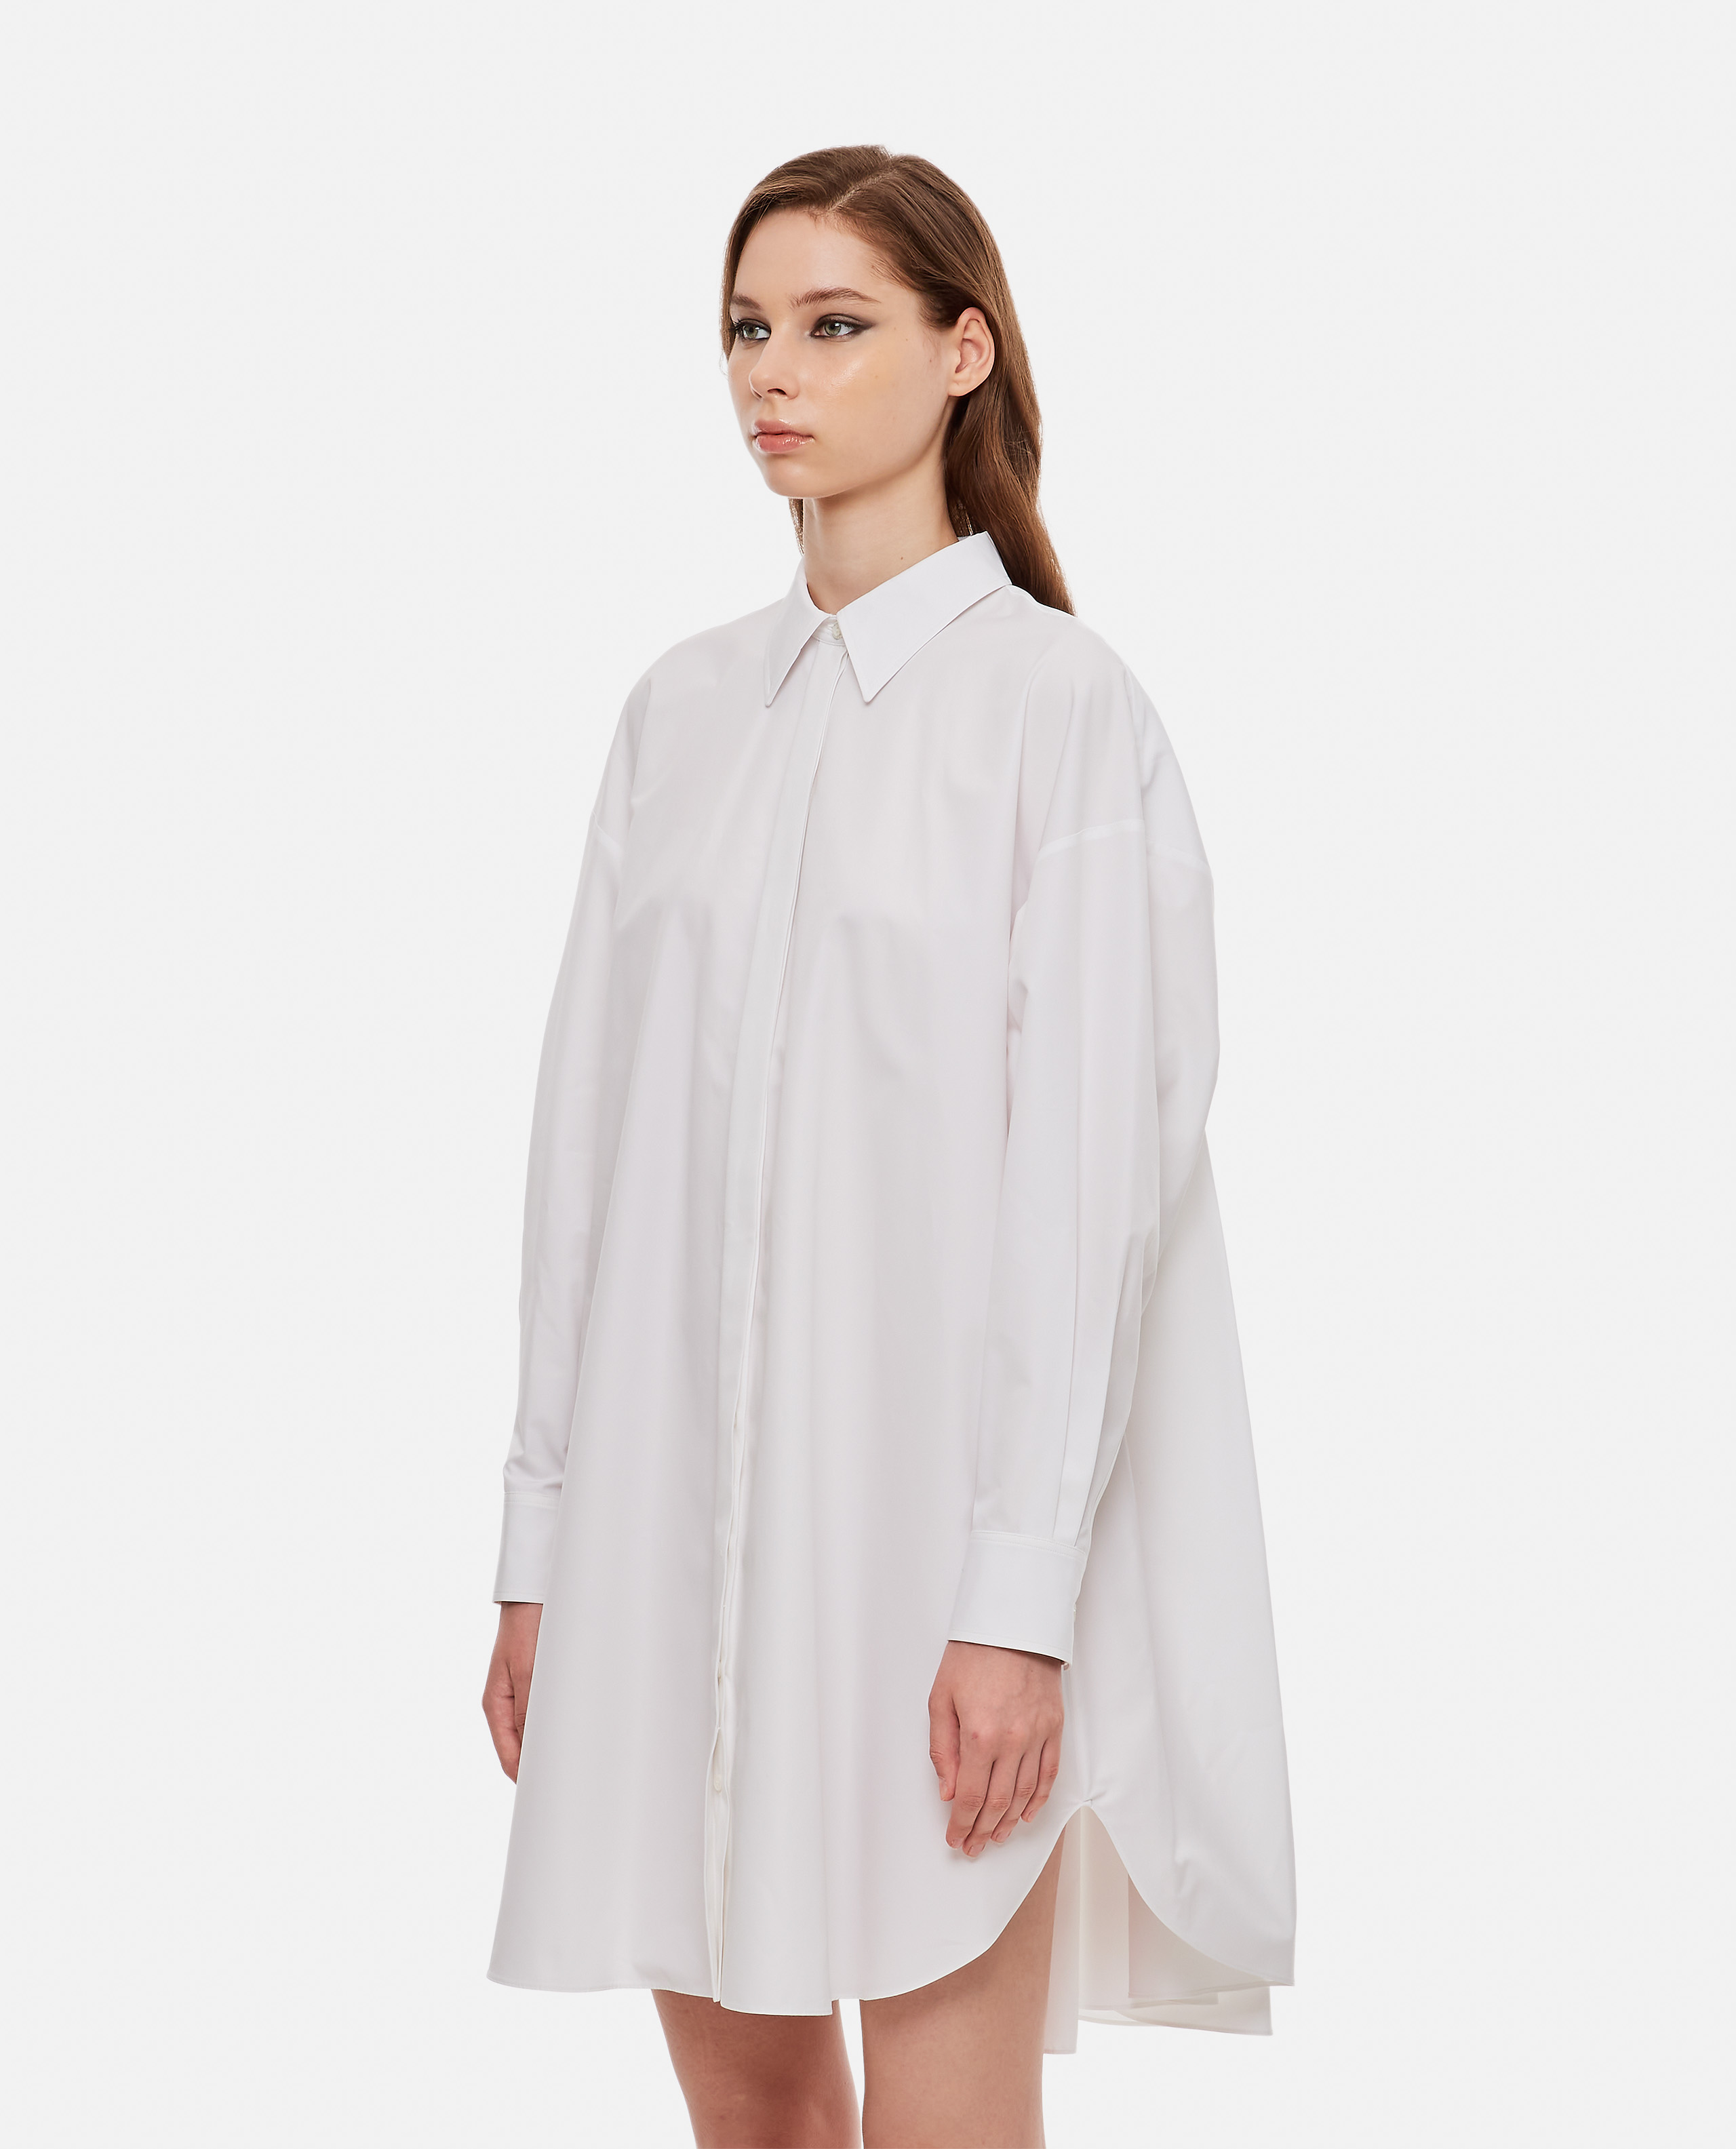 CAPEBACK MINI SHIRT DRESS günstig online kaufen